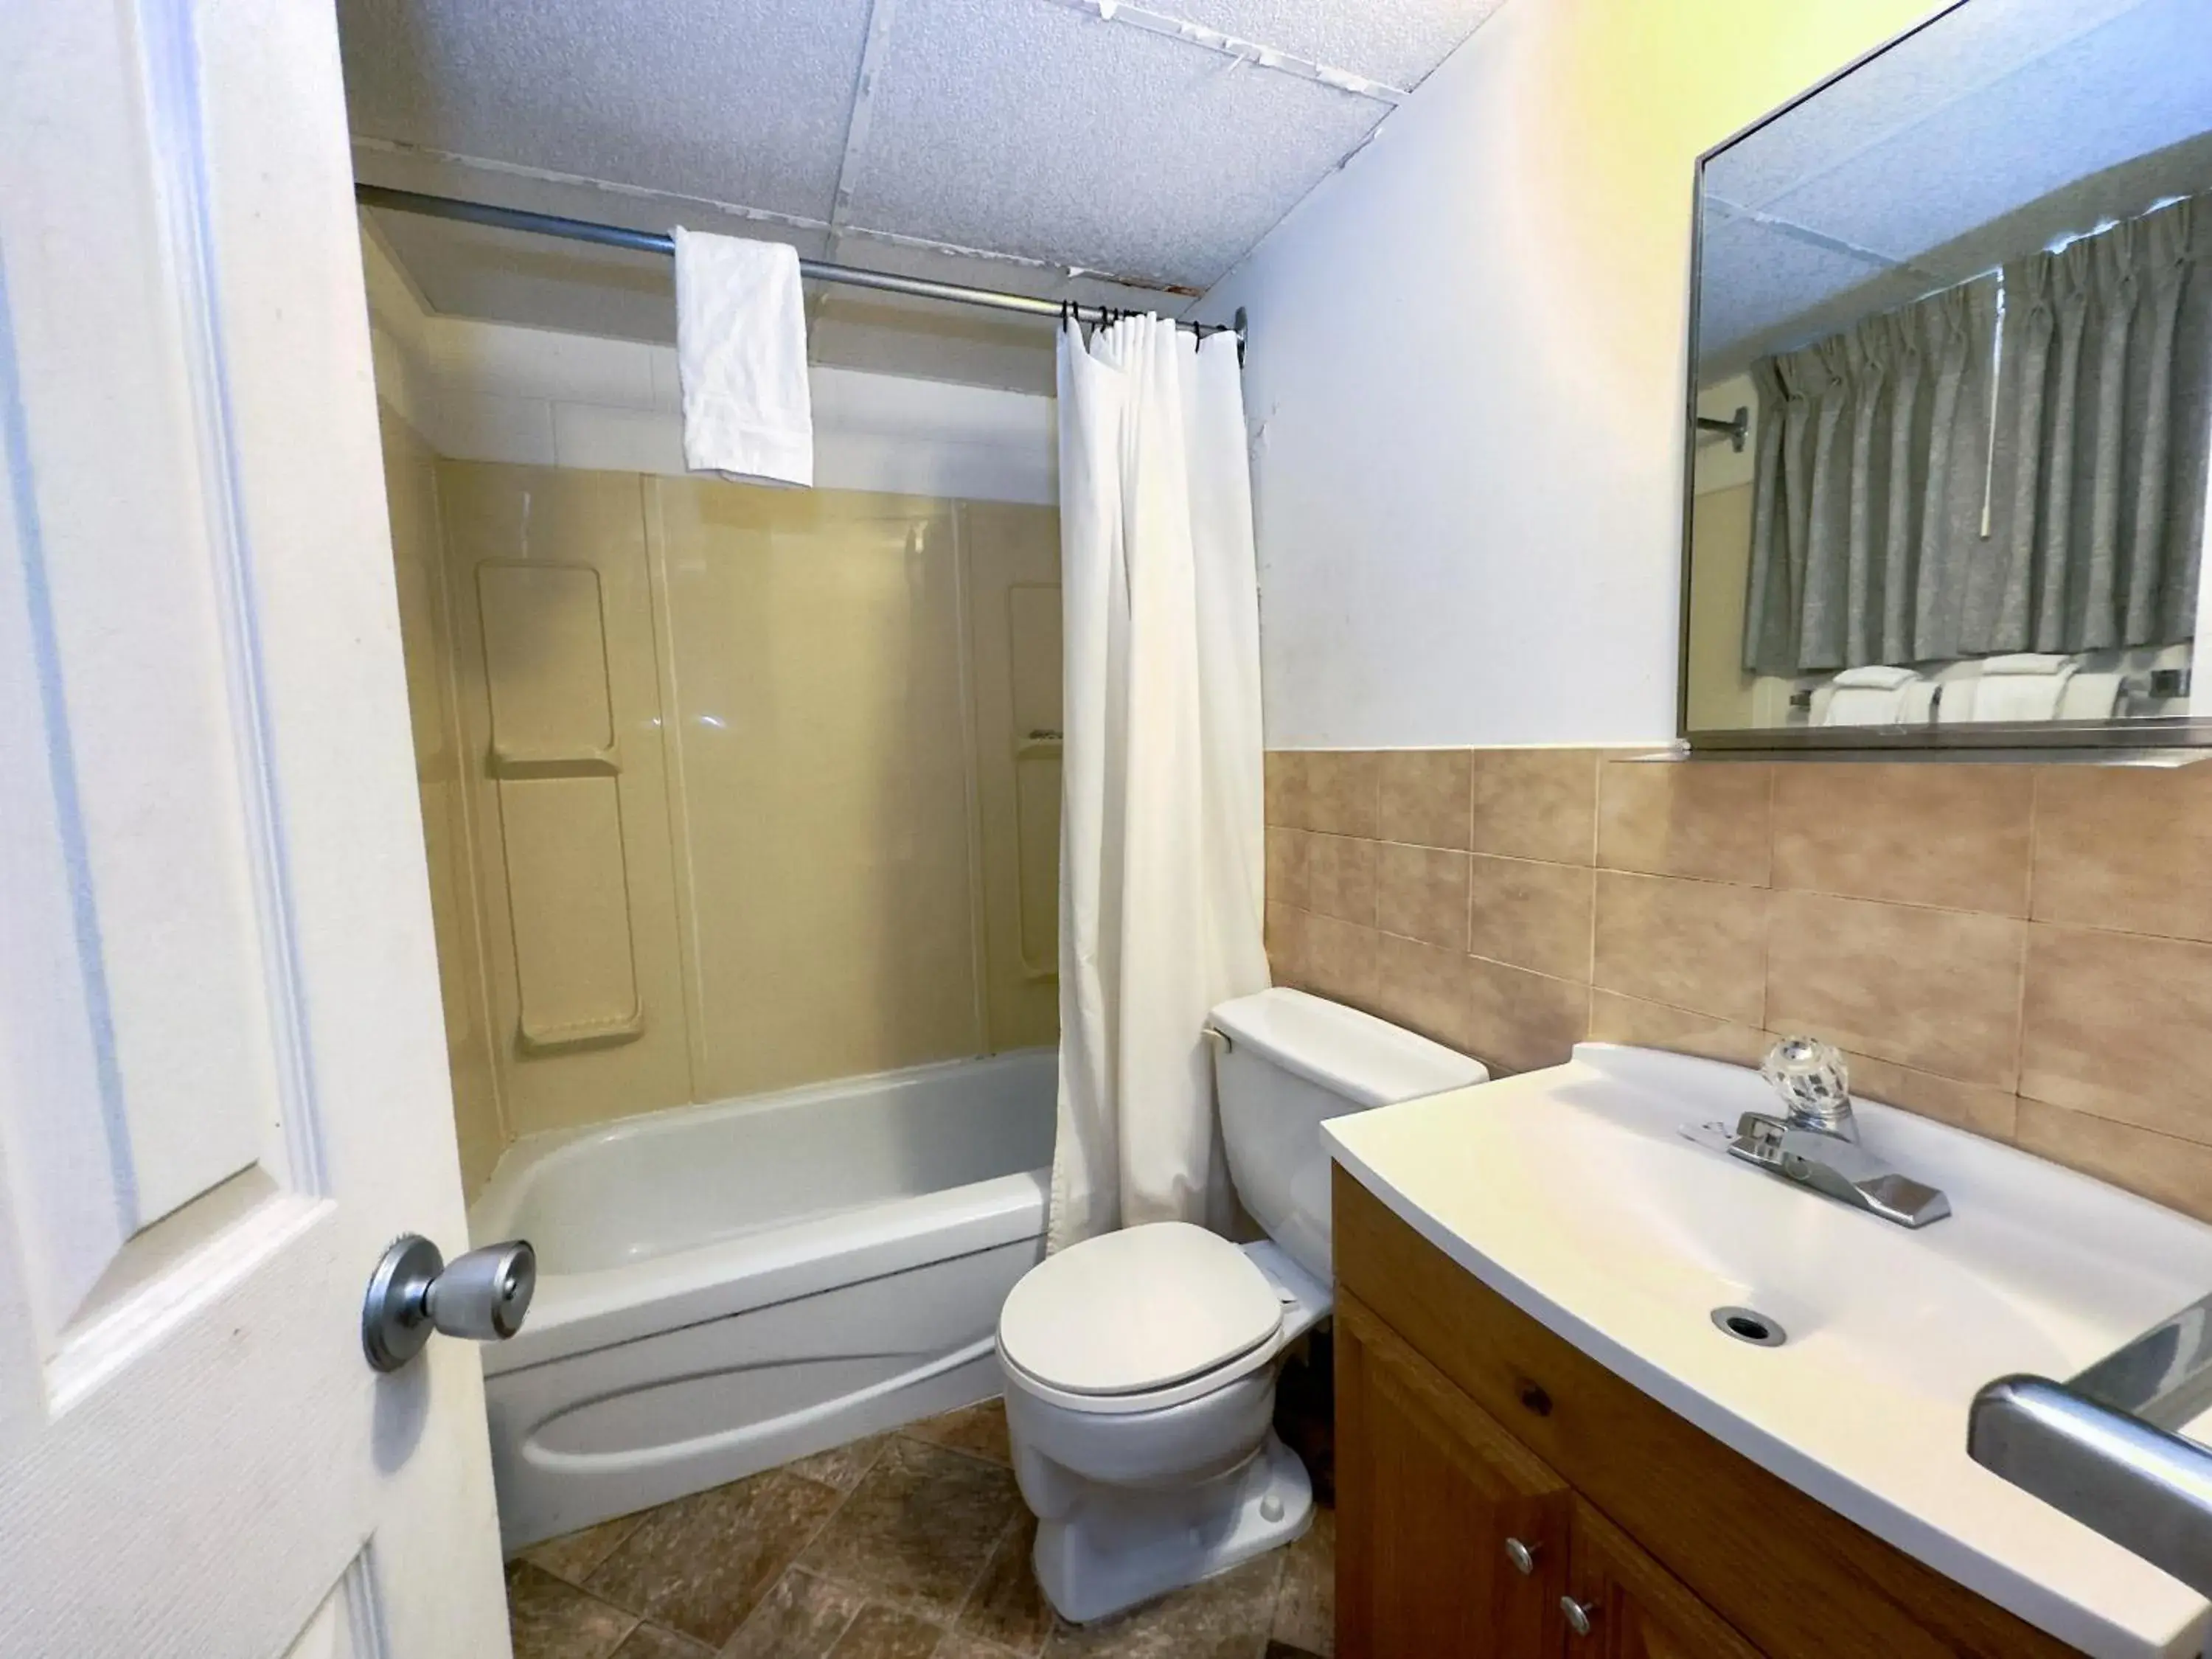 Bathroom in Capone's Hideaway Motel